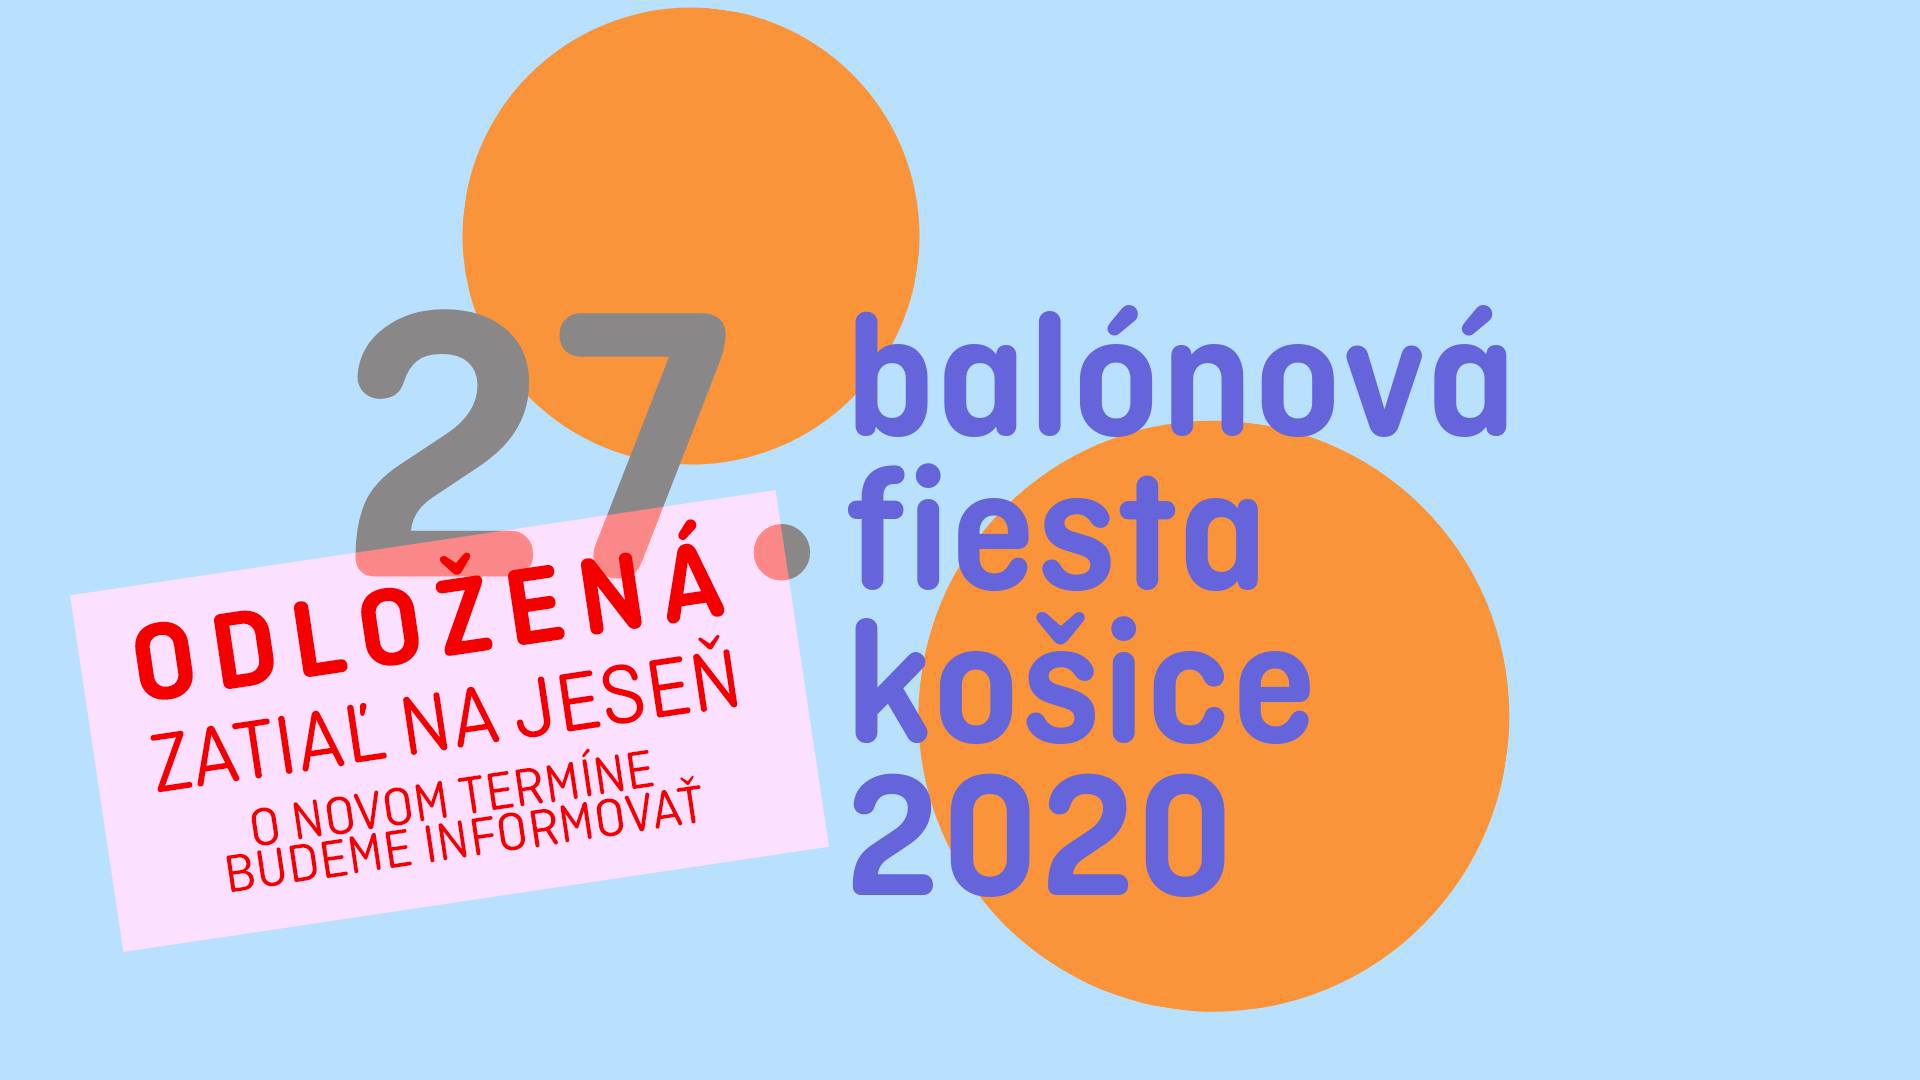 27. balónová fiesta košice 2020 - - - POSUNUTÉ